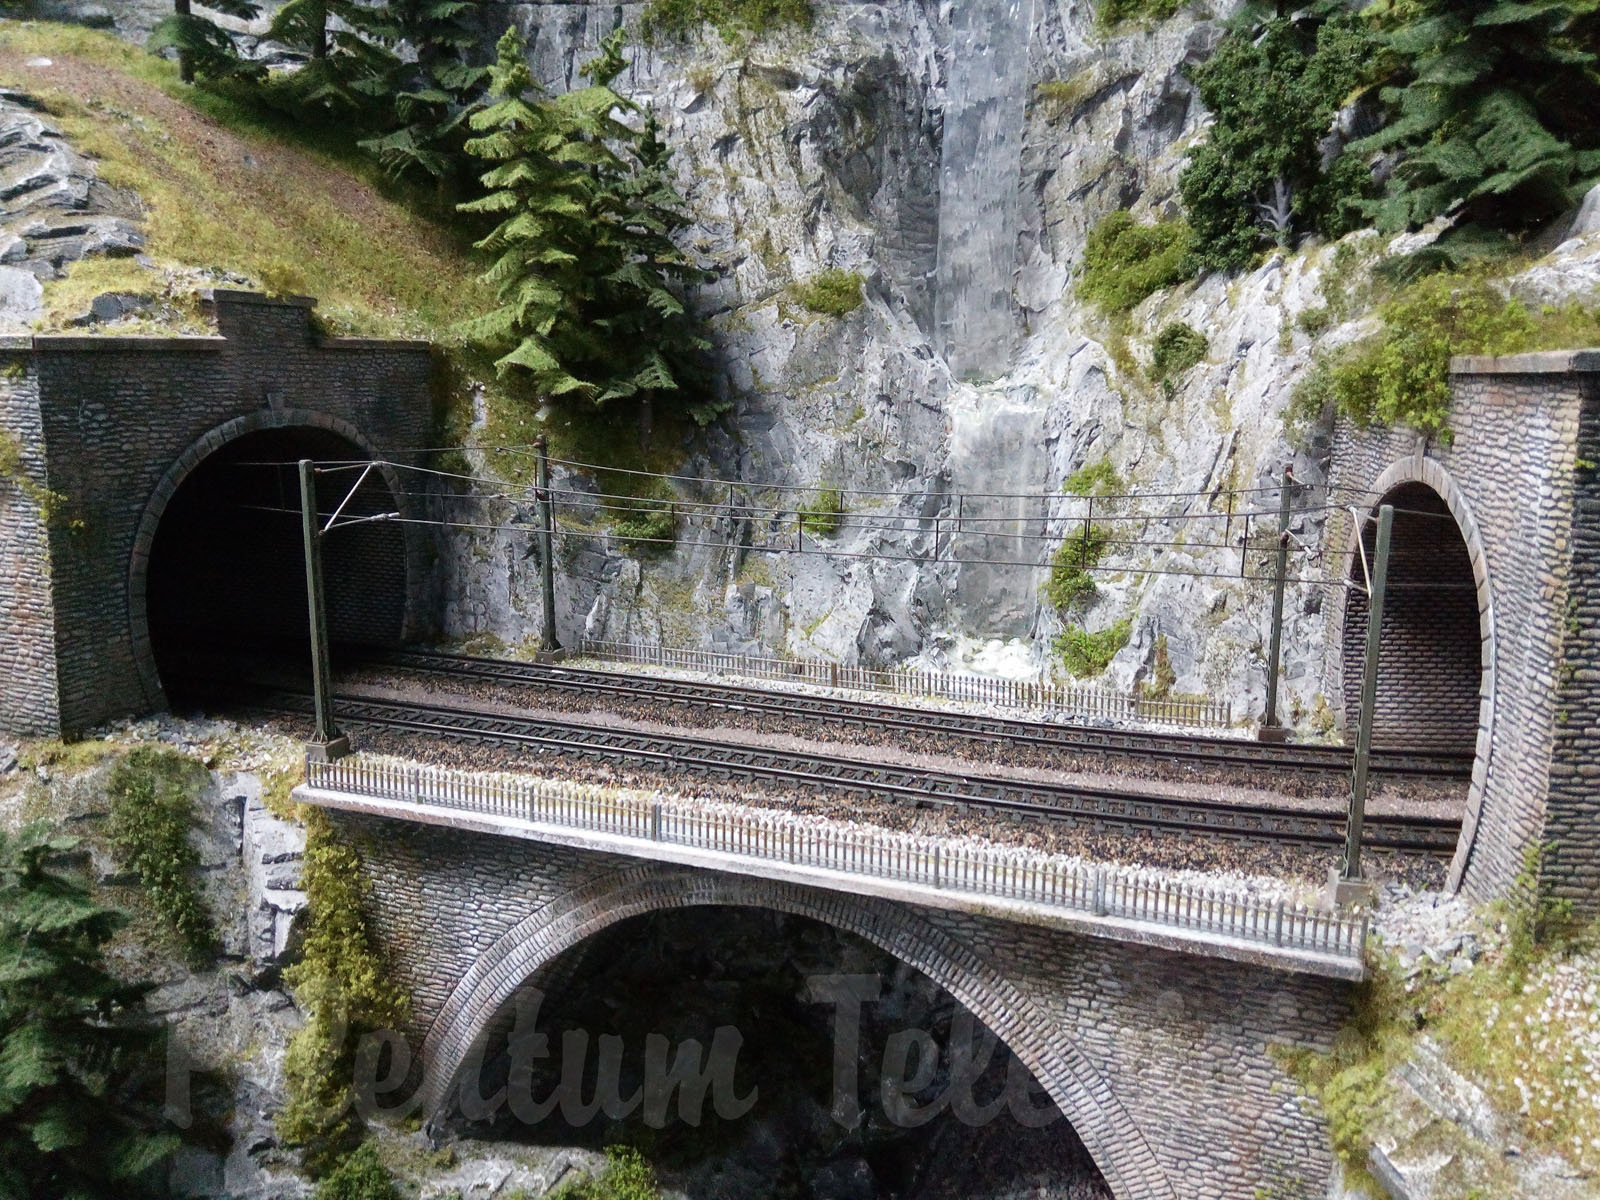 La ferrovia in miniatura TraumWerk di Hans-Peter Porsche